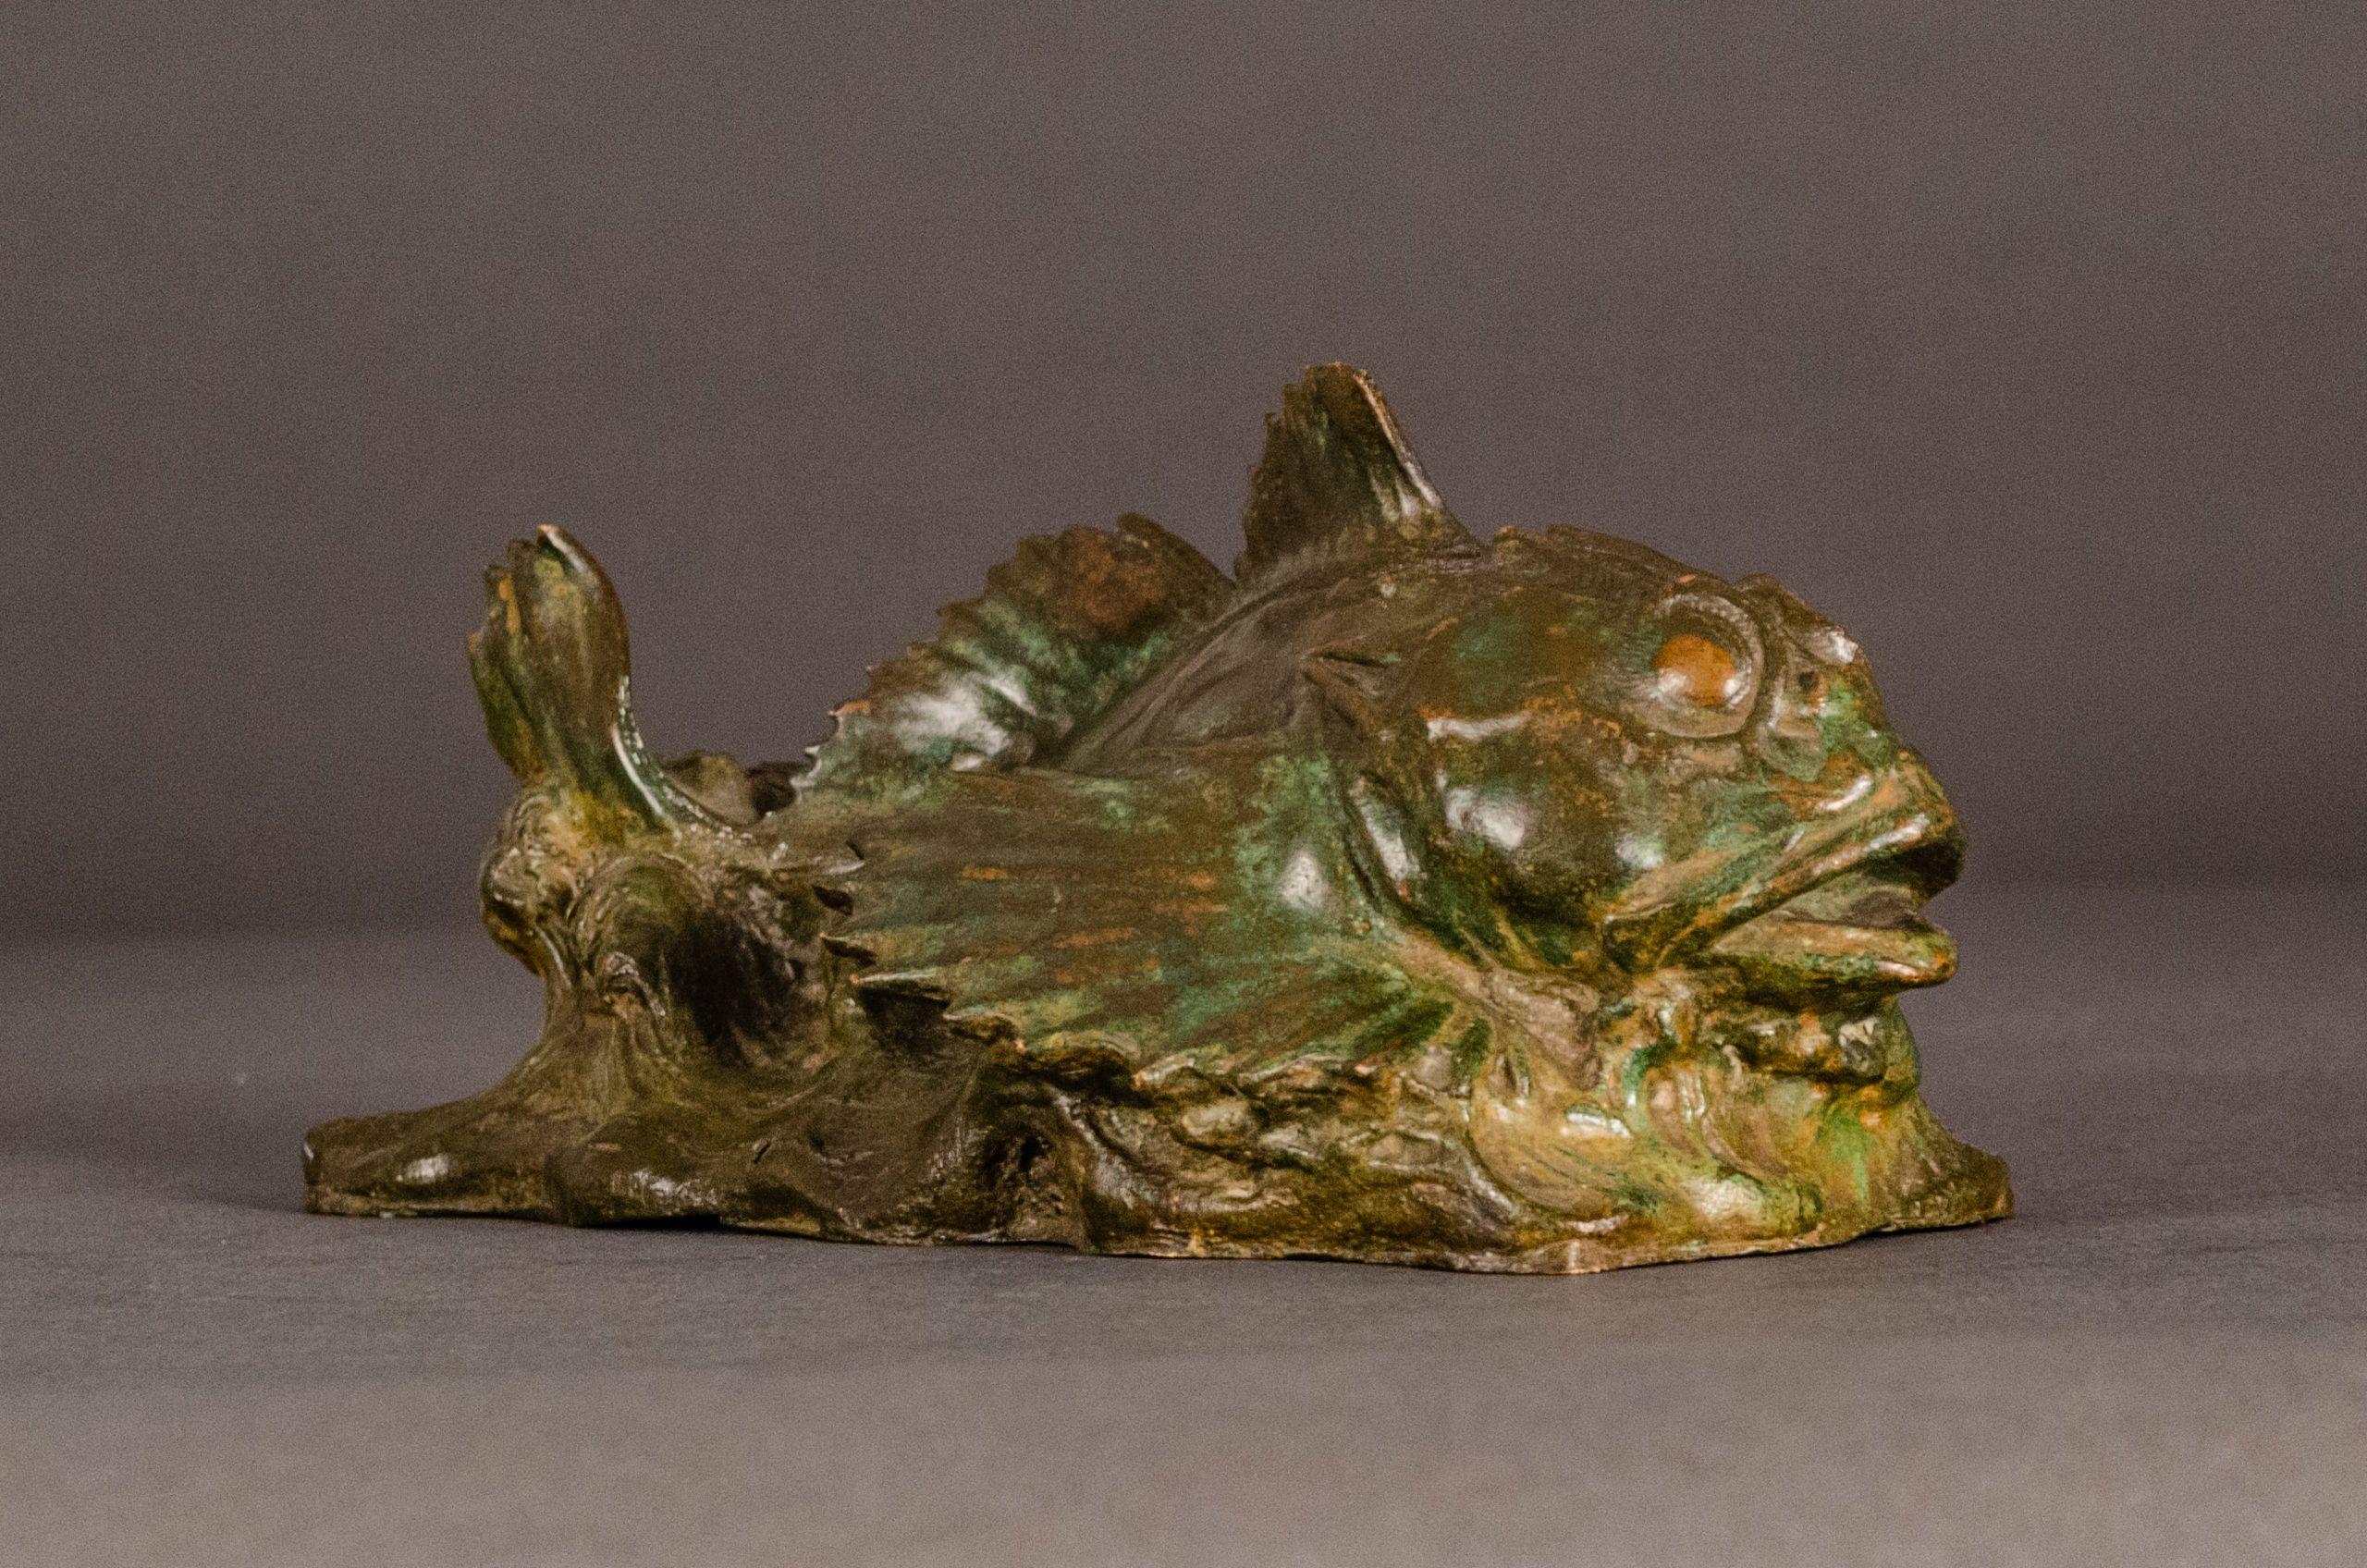 Paul Bartlett Figurative Sculpture - "Sculpin Fish" Paul W. Bartlett, Bronze Animal Sculpture, Decorative Arts